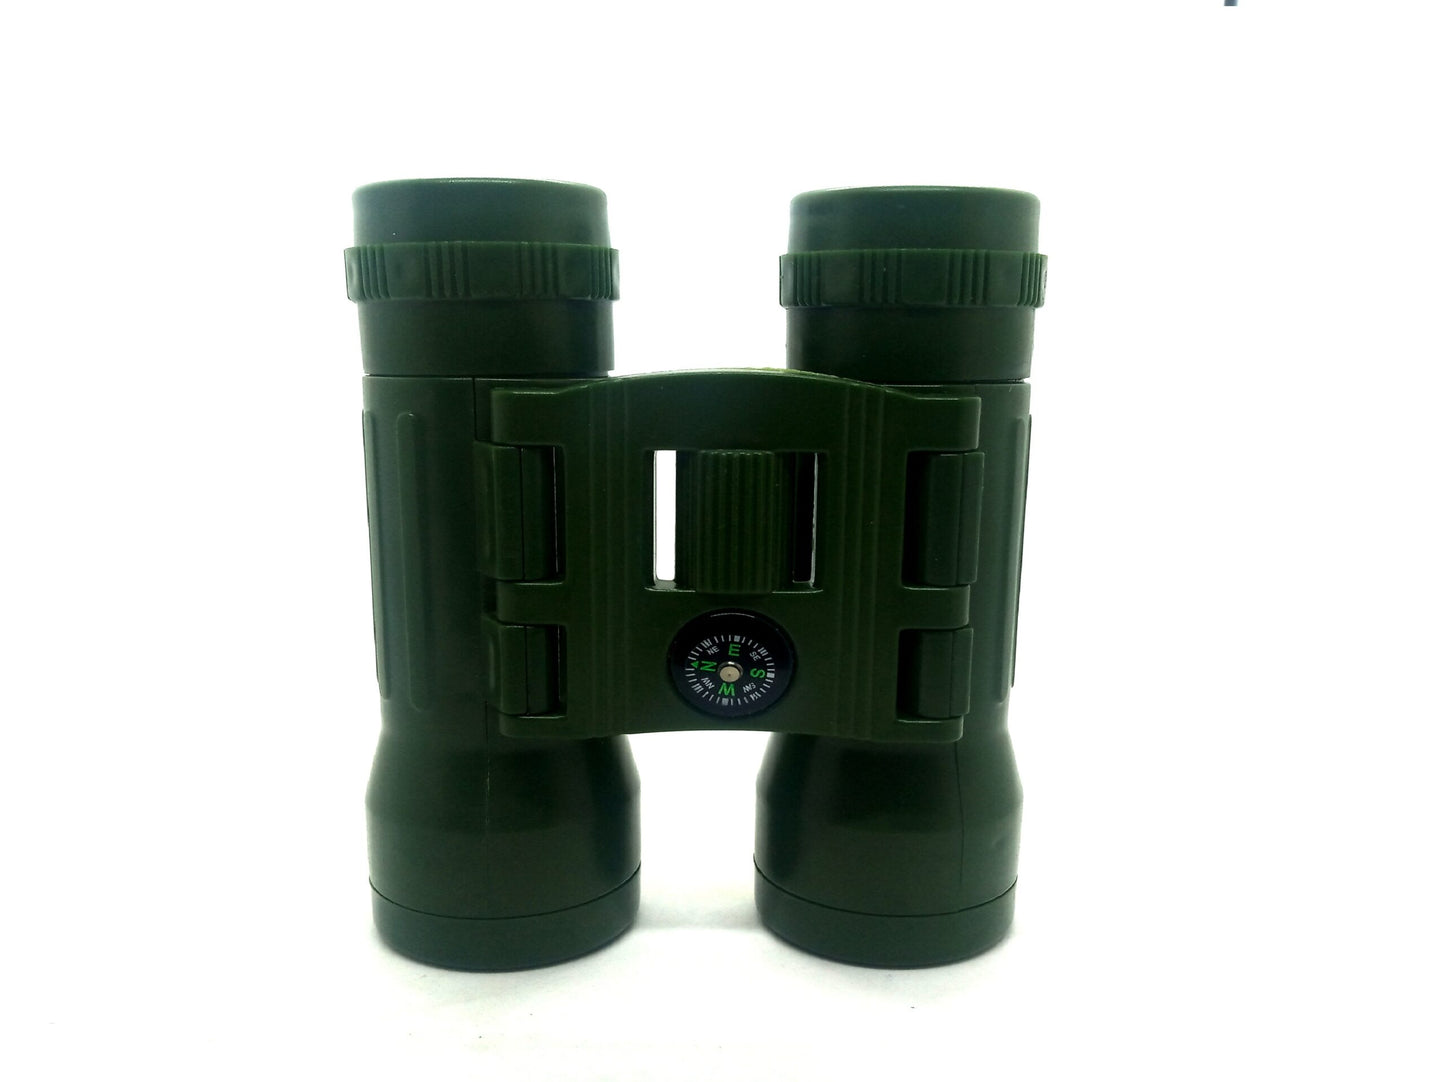 Binoculars for Kids, Compact HD Children Binoculars for Bird Watching, Travel, Hunting, etc